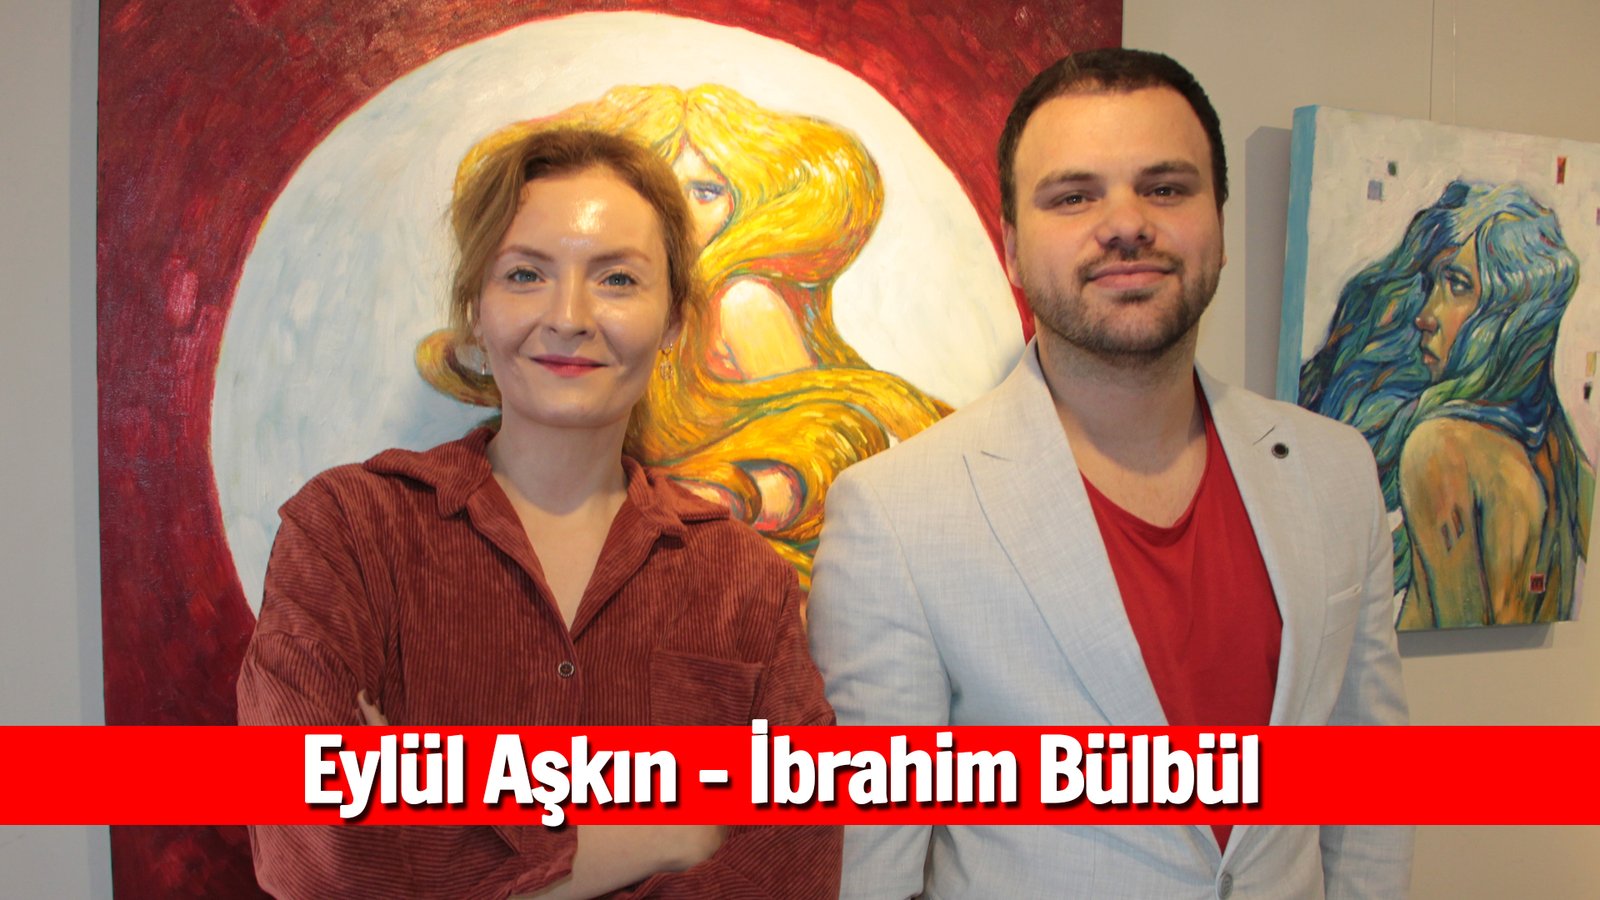 Ibrahim Bülbül Nisan In Film And Nez In Music Are Moving Full Steam Ahead Eylül Aşkın Interview